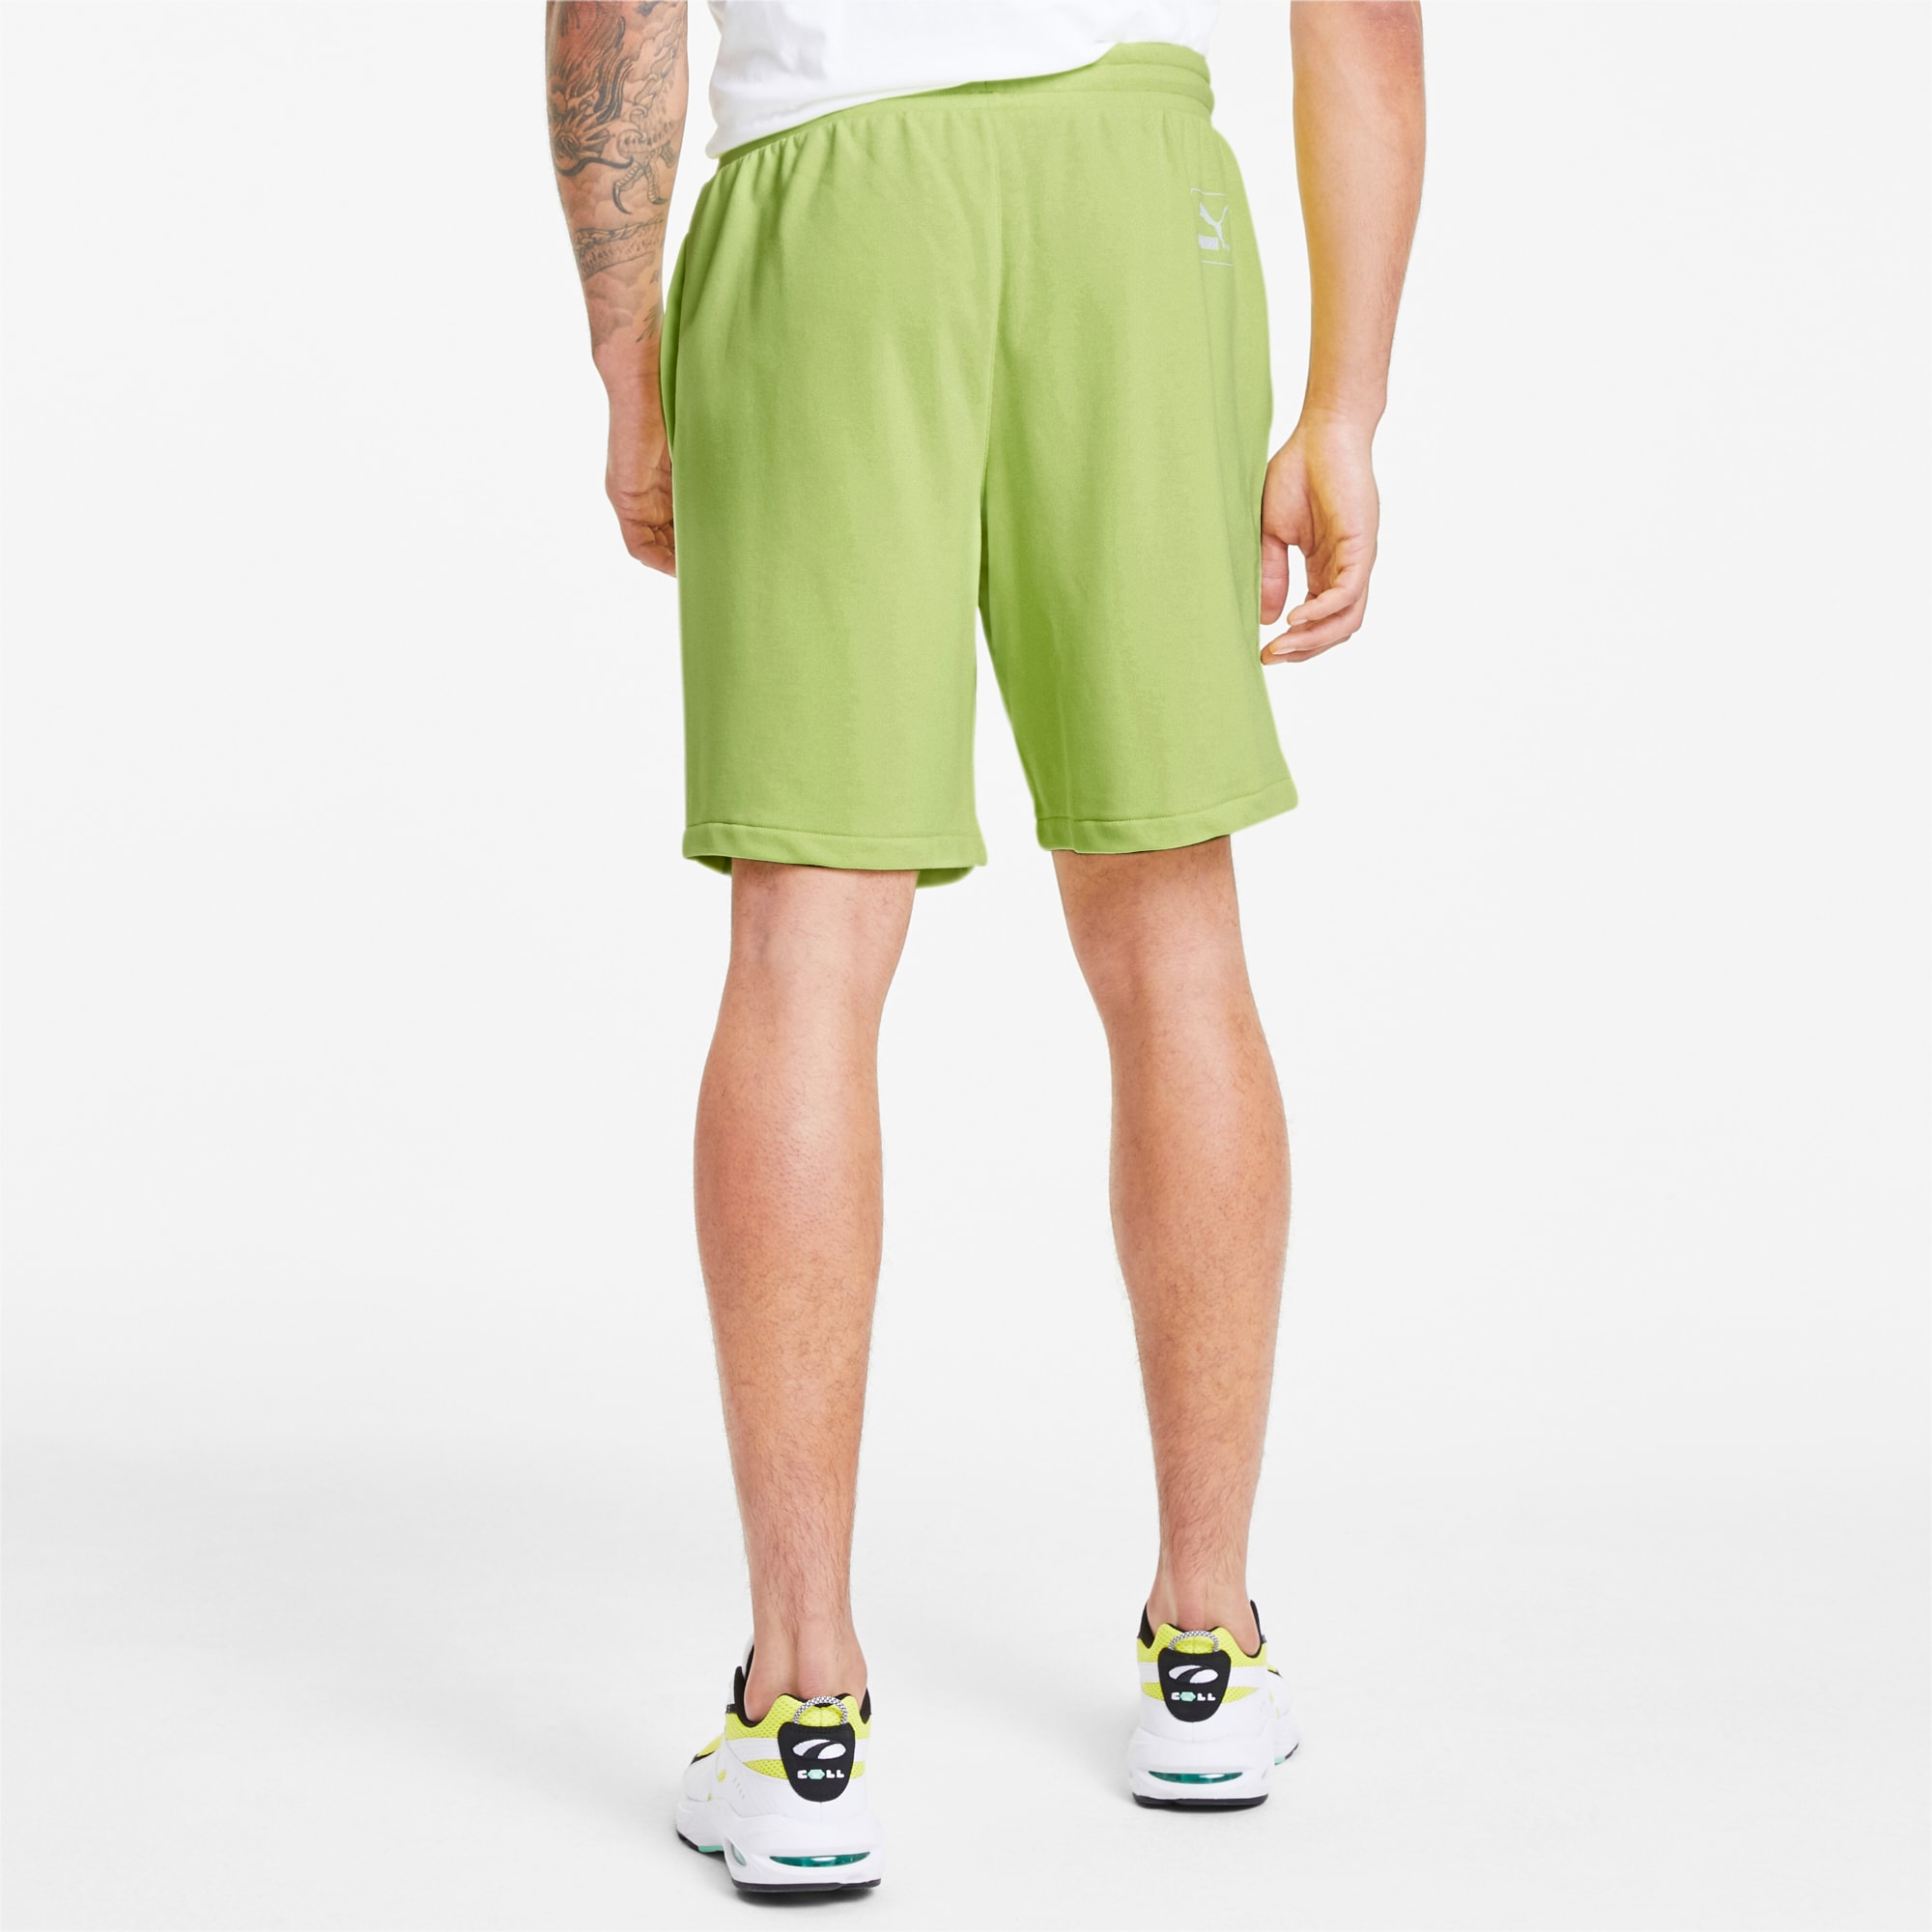 puma lime green golf shorts